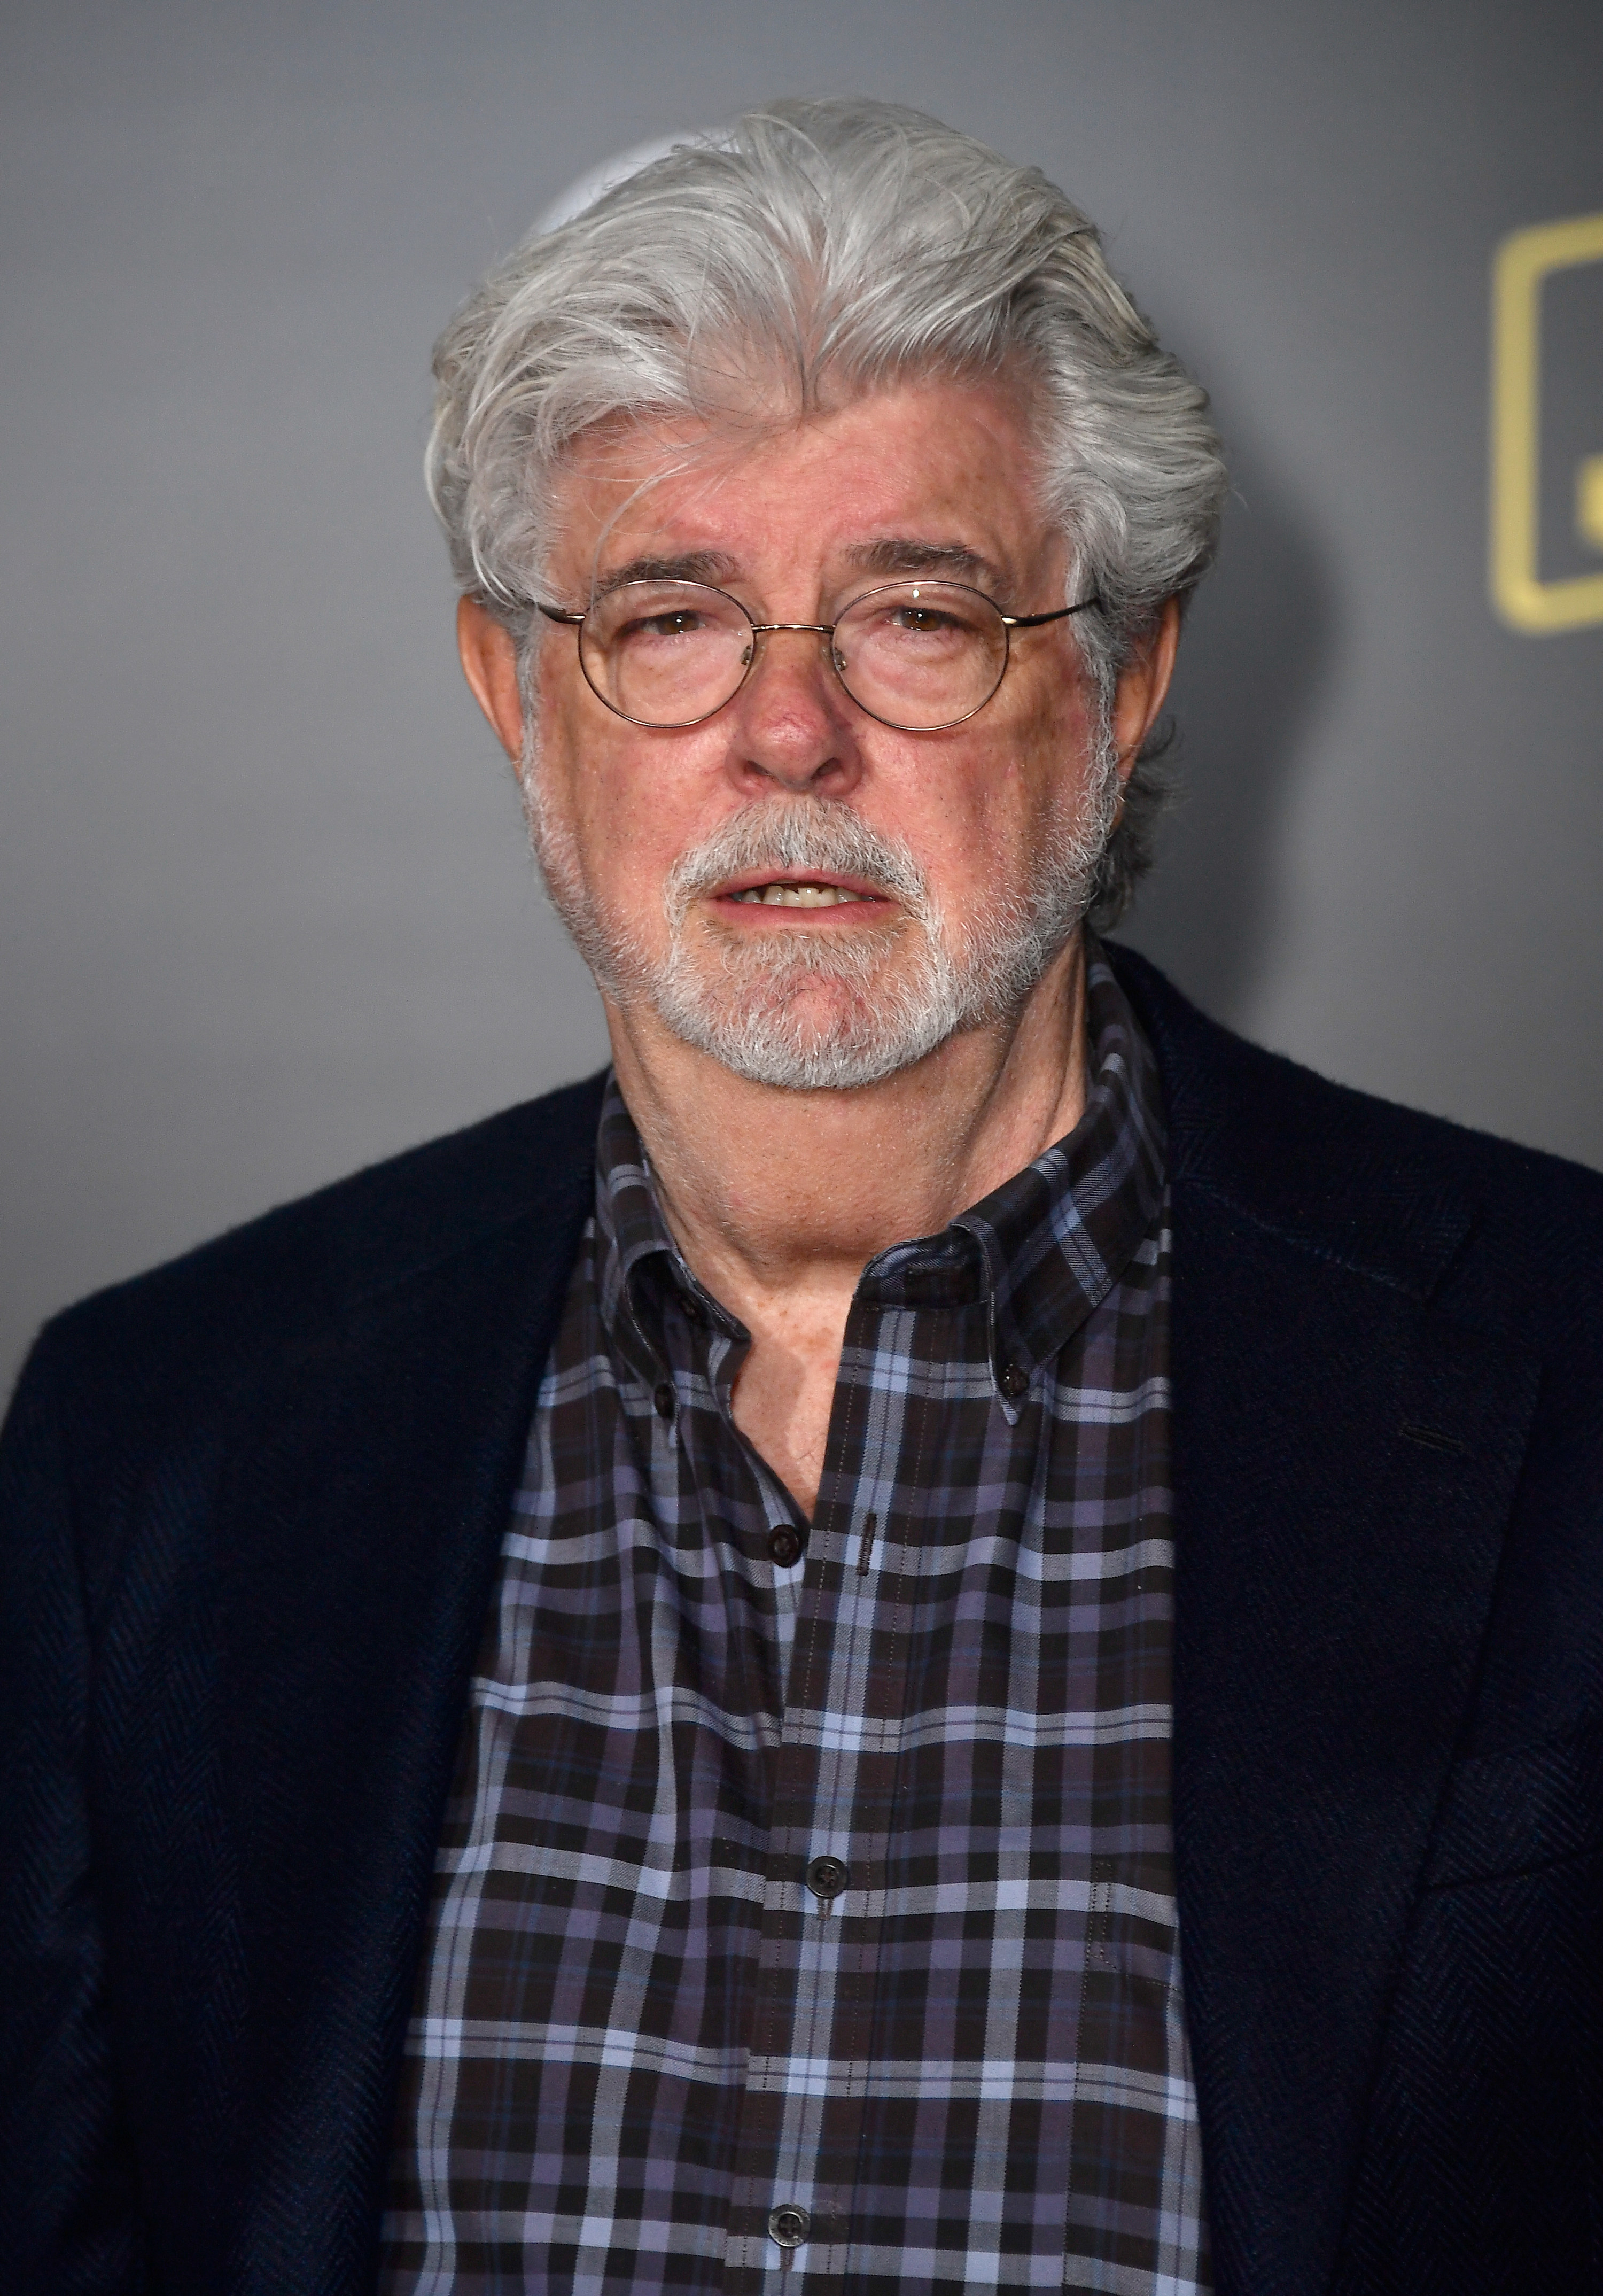 George Lucas at a film premiere